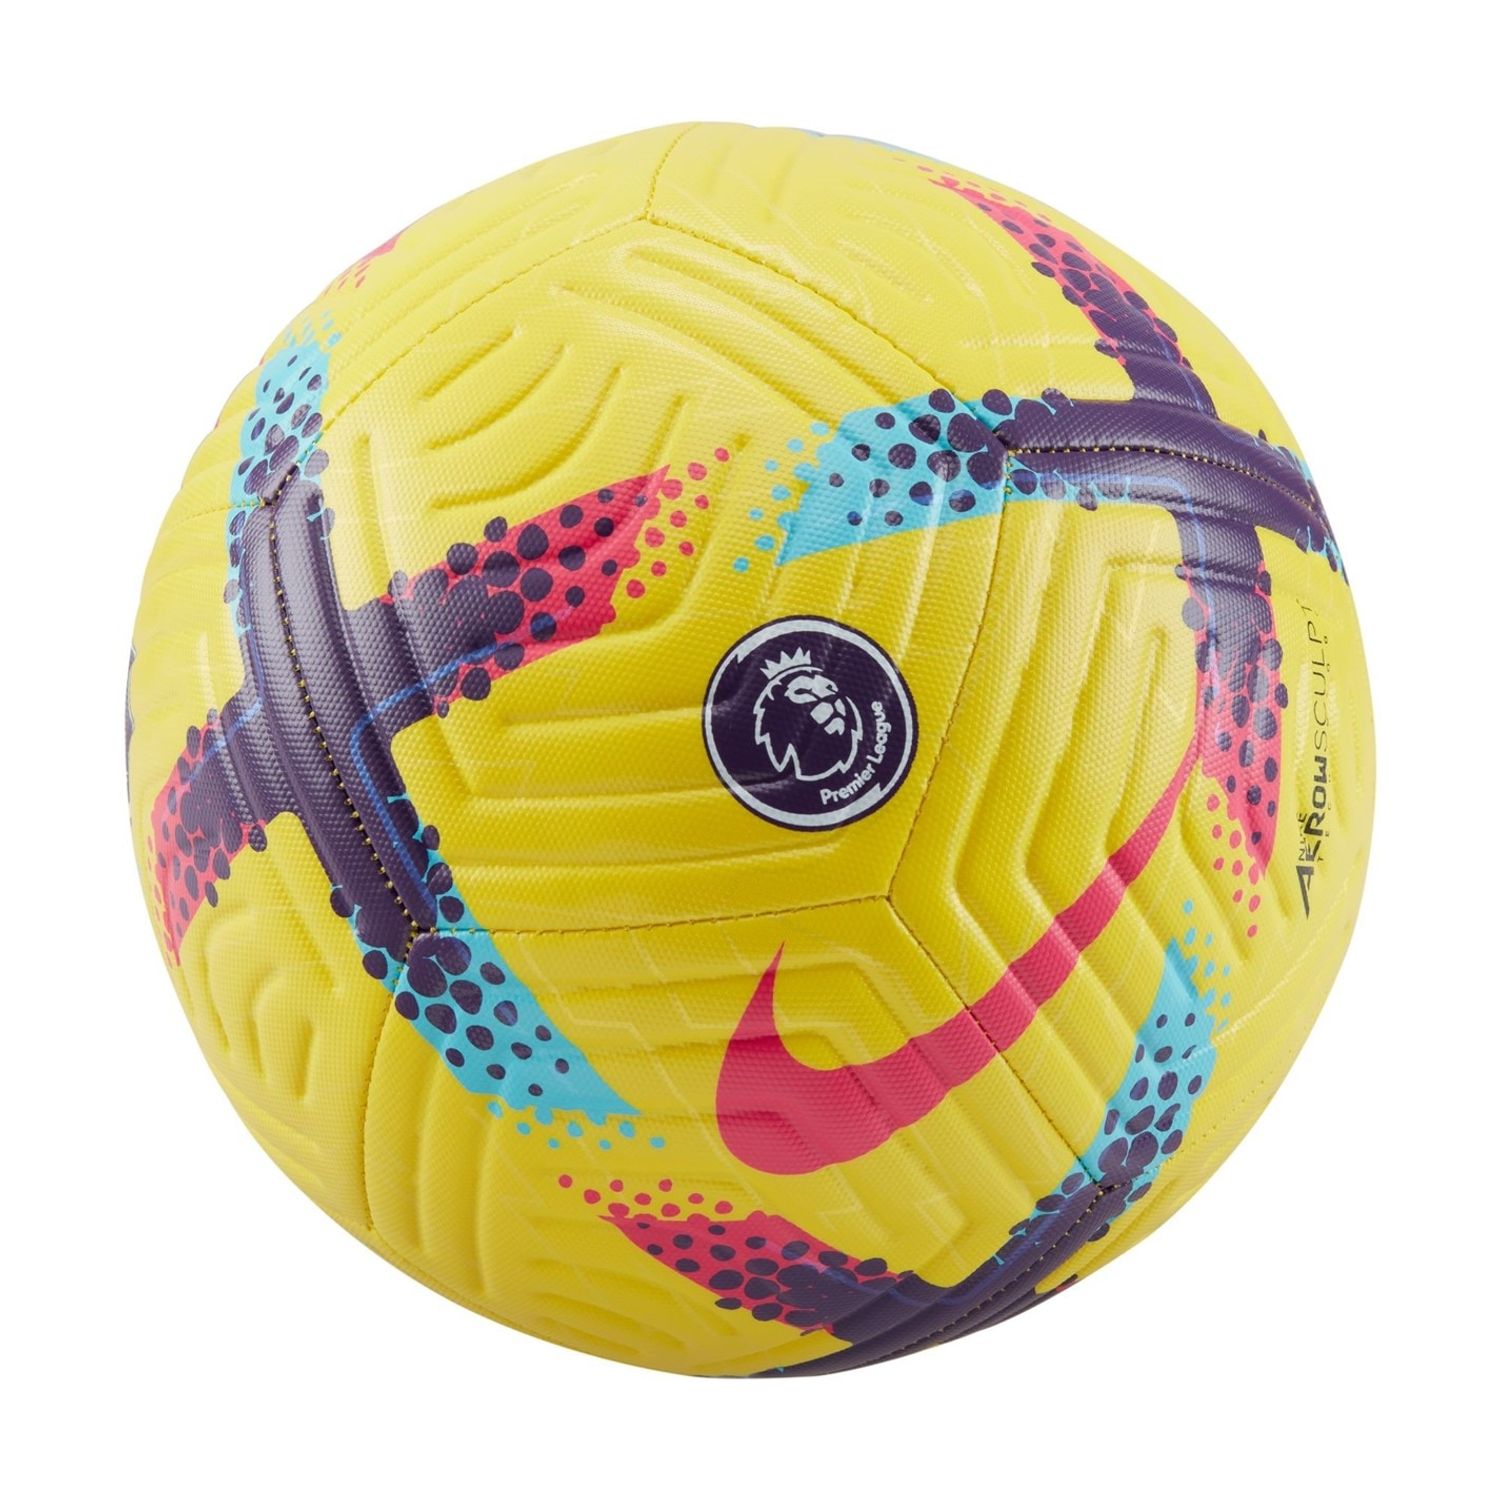 Premier League Club Elite Soccer Ball.